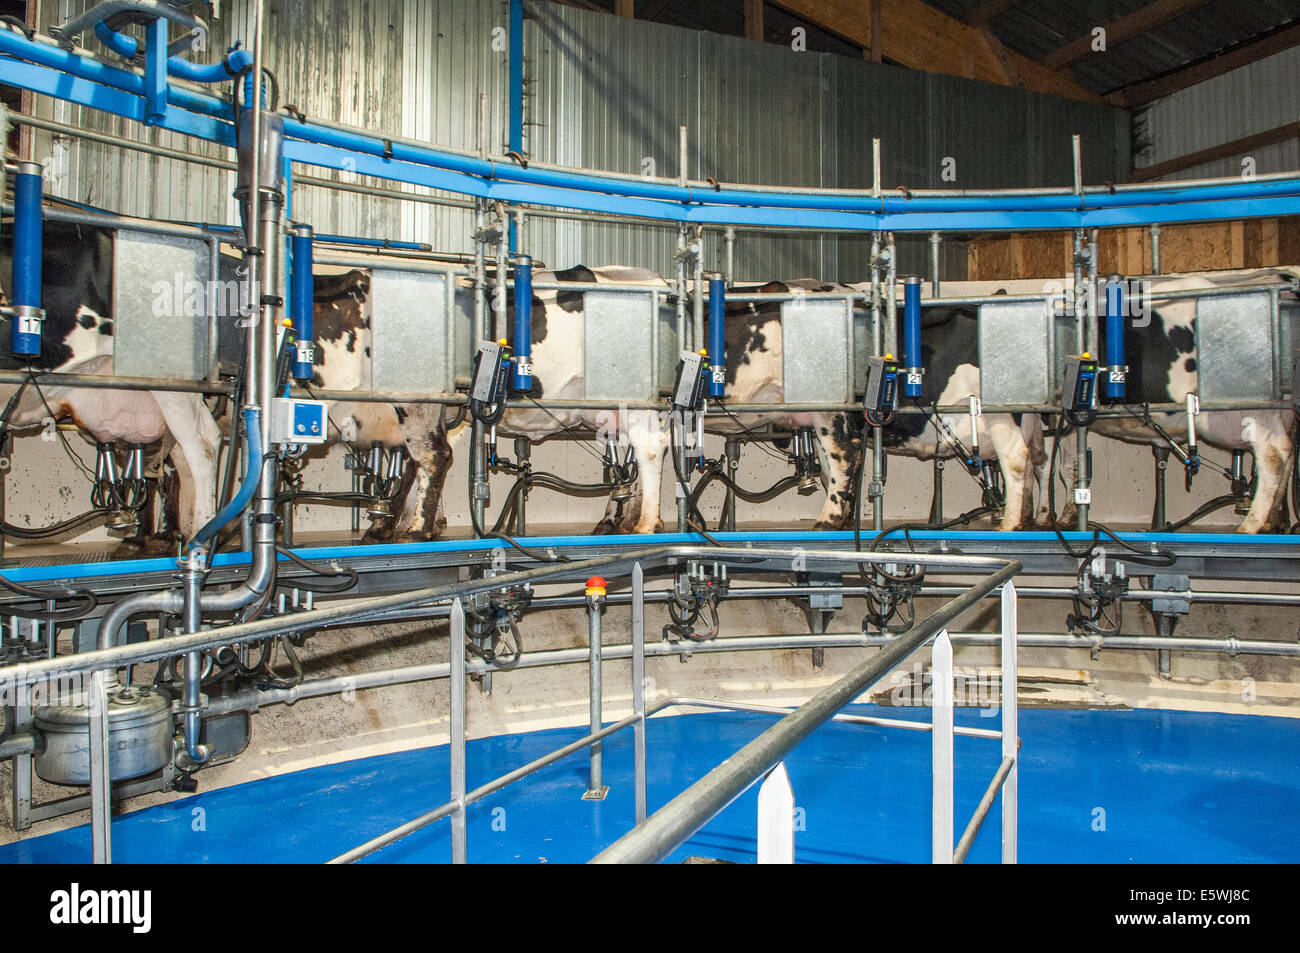 Cow, milking Stock Photo